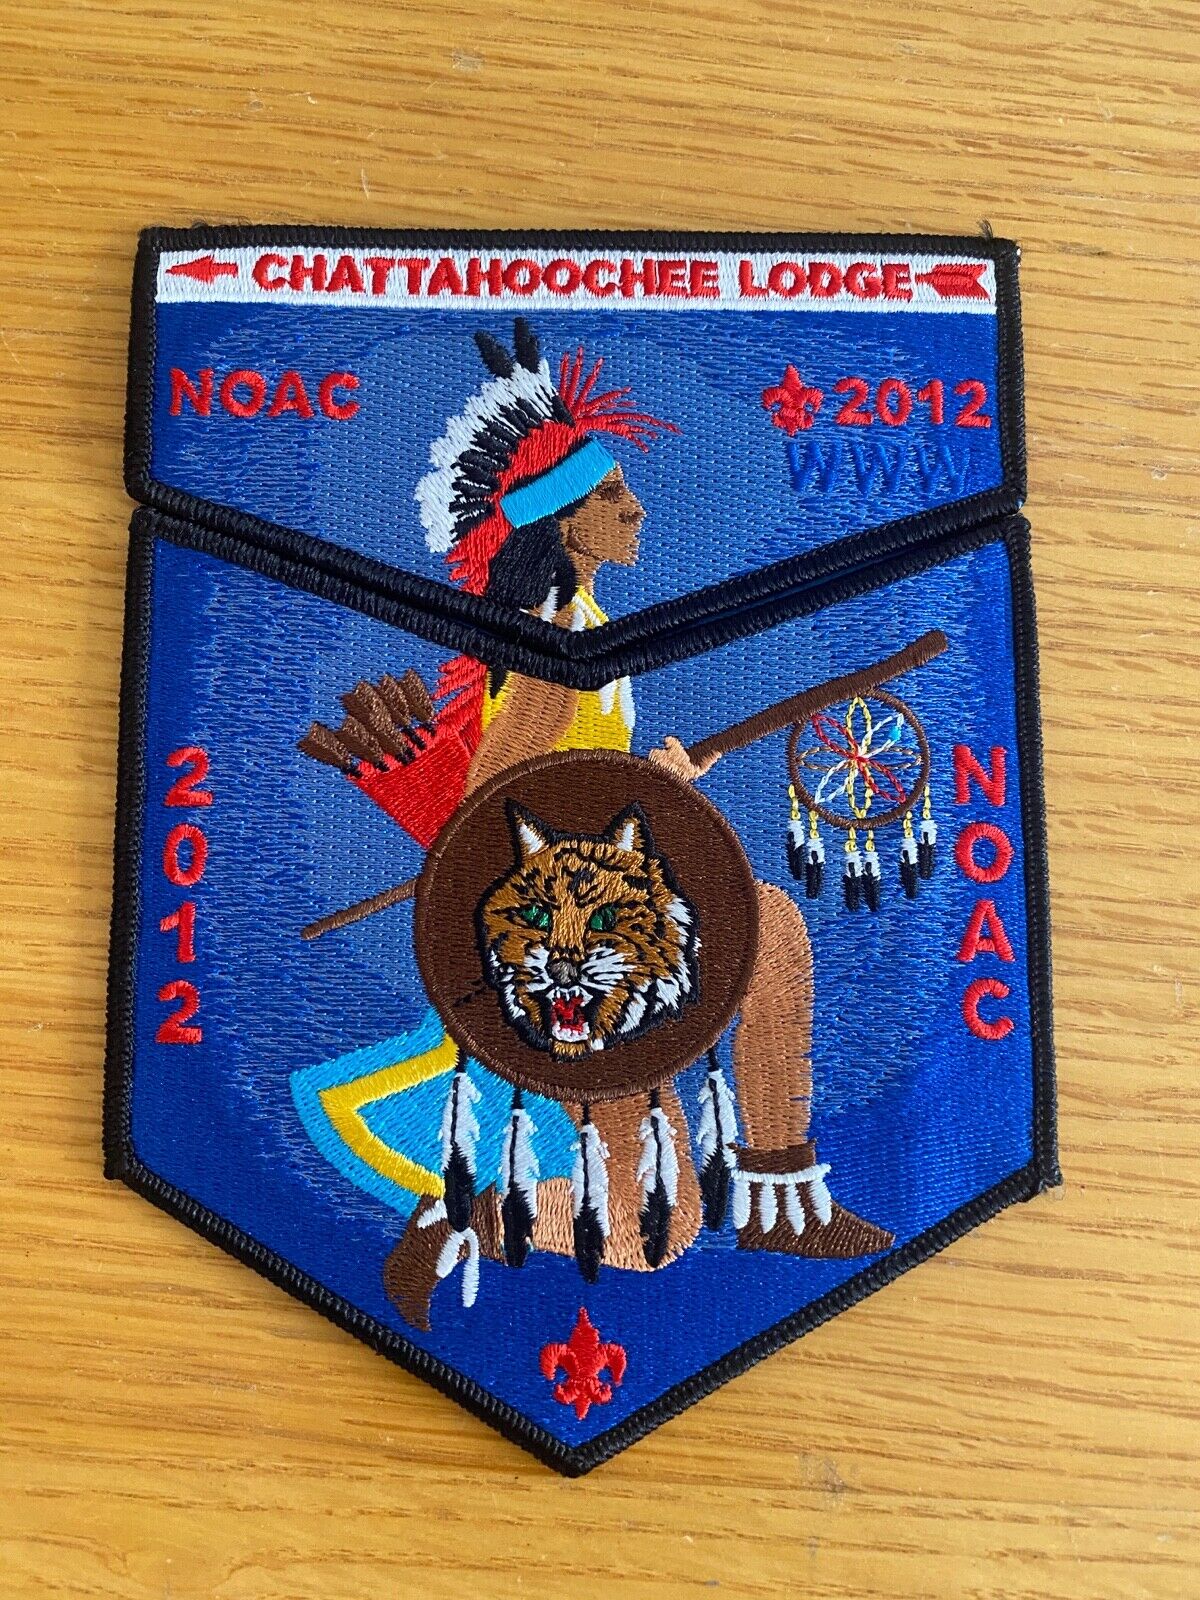 Chattahoochee Lodge 204 - NOAC 2012 set